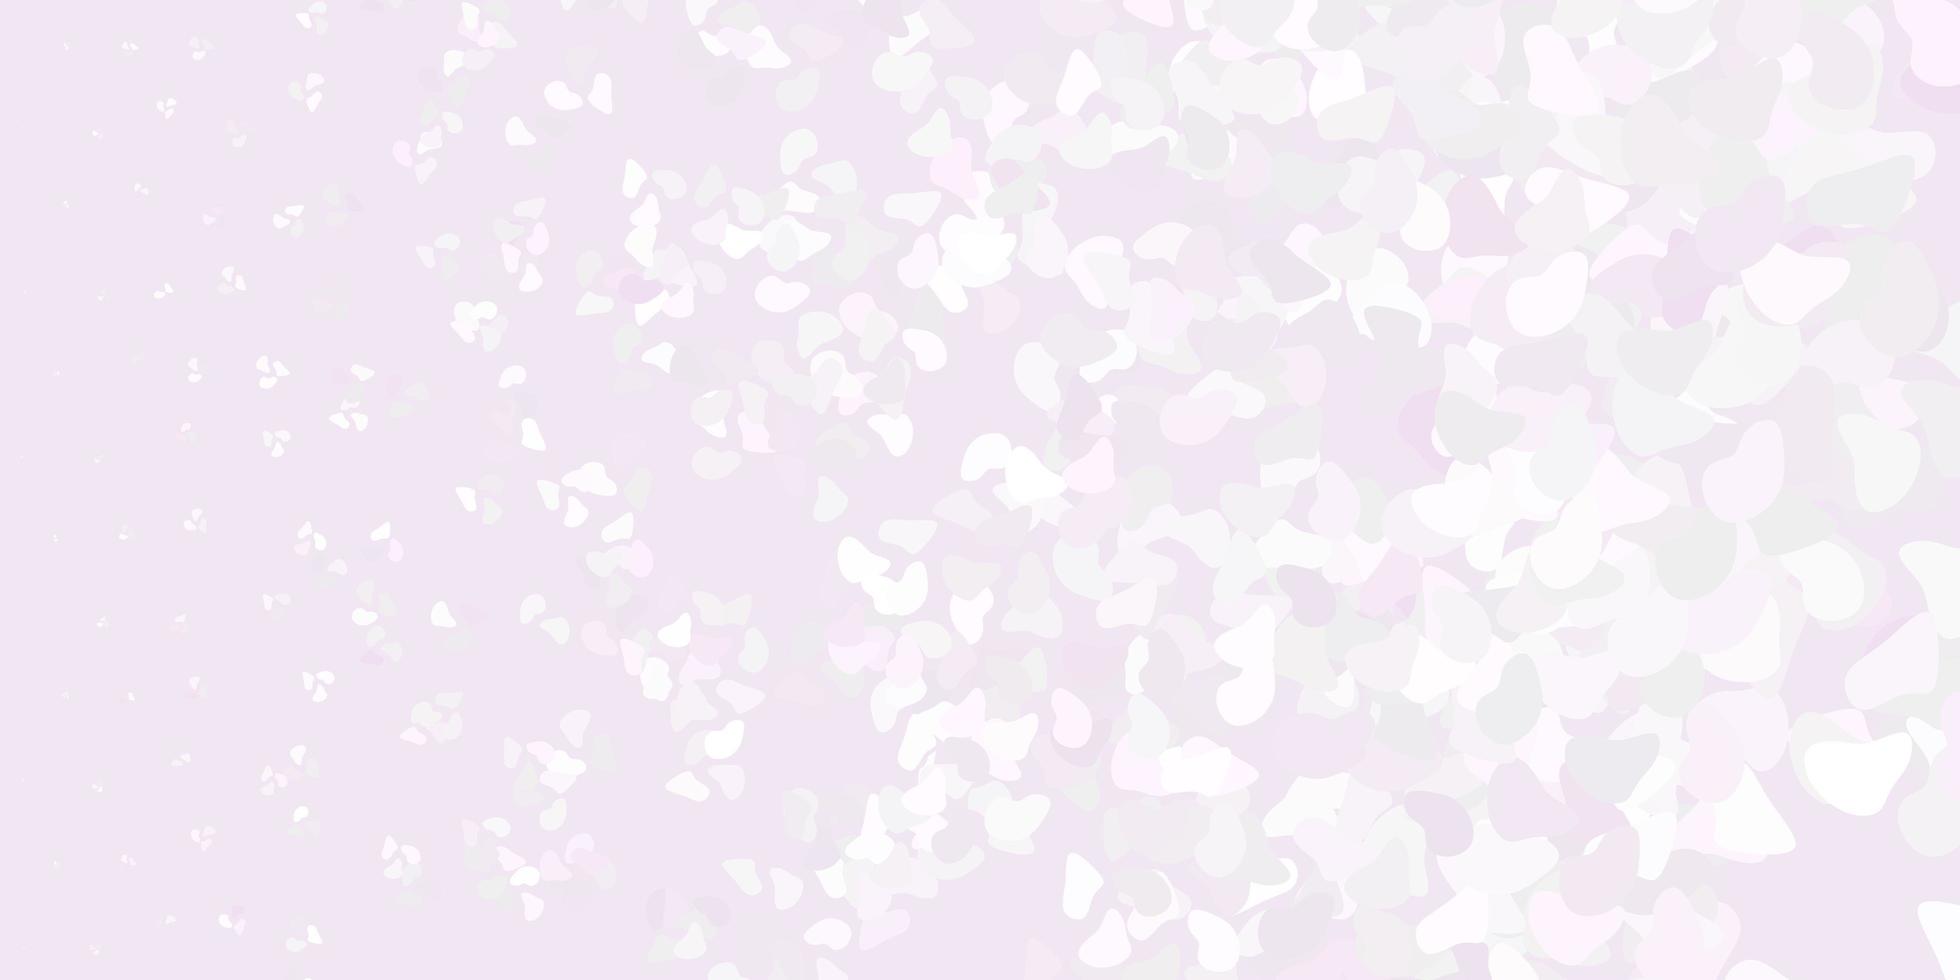 patrón de vector púrpura claro con formas abstractas.